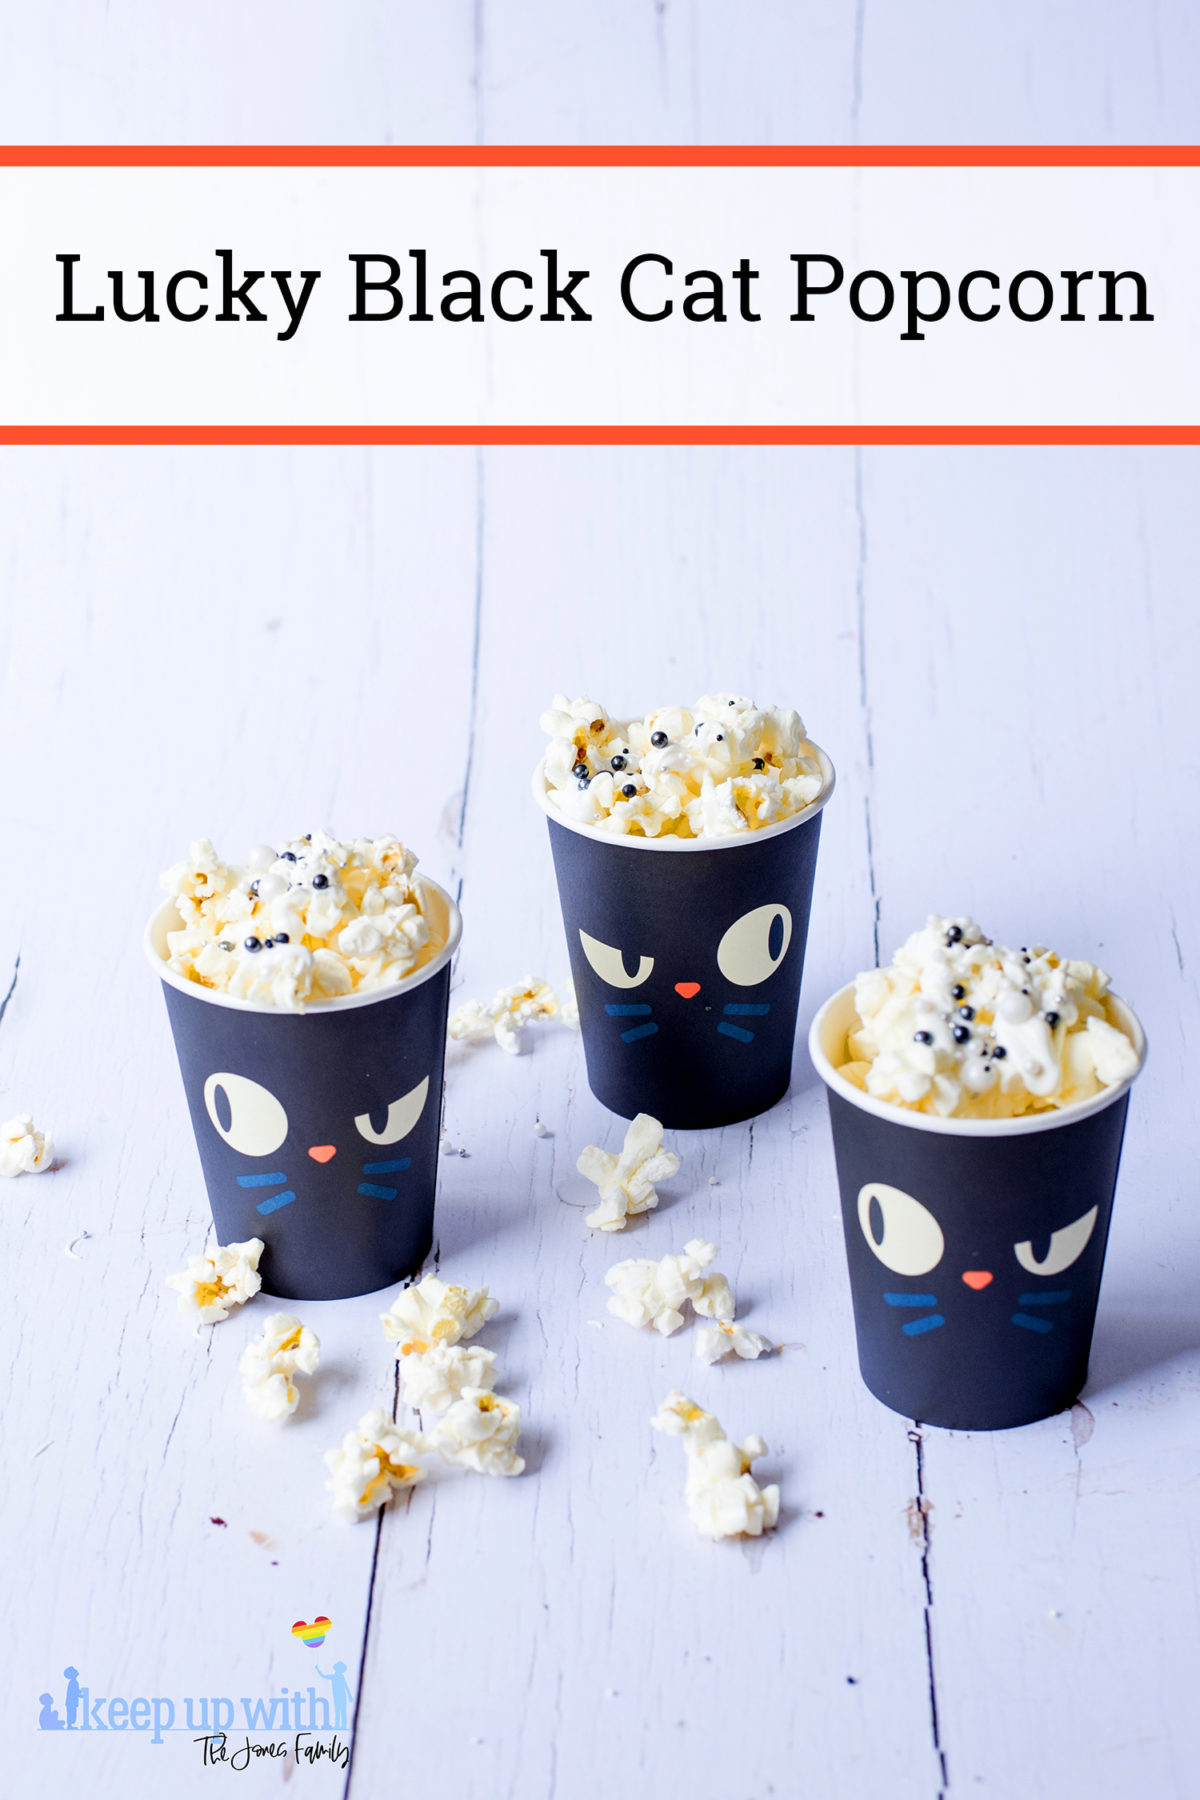 Image shows Hocus Pocus Popcorn in three Thackery Binx black cat cups